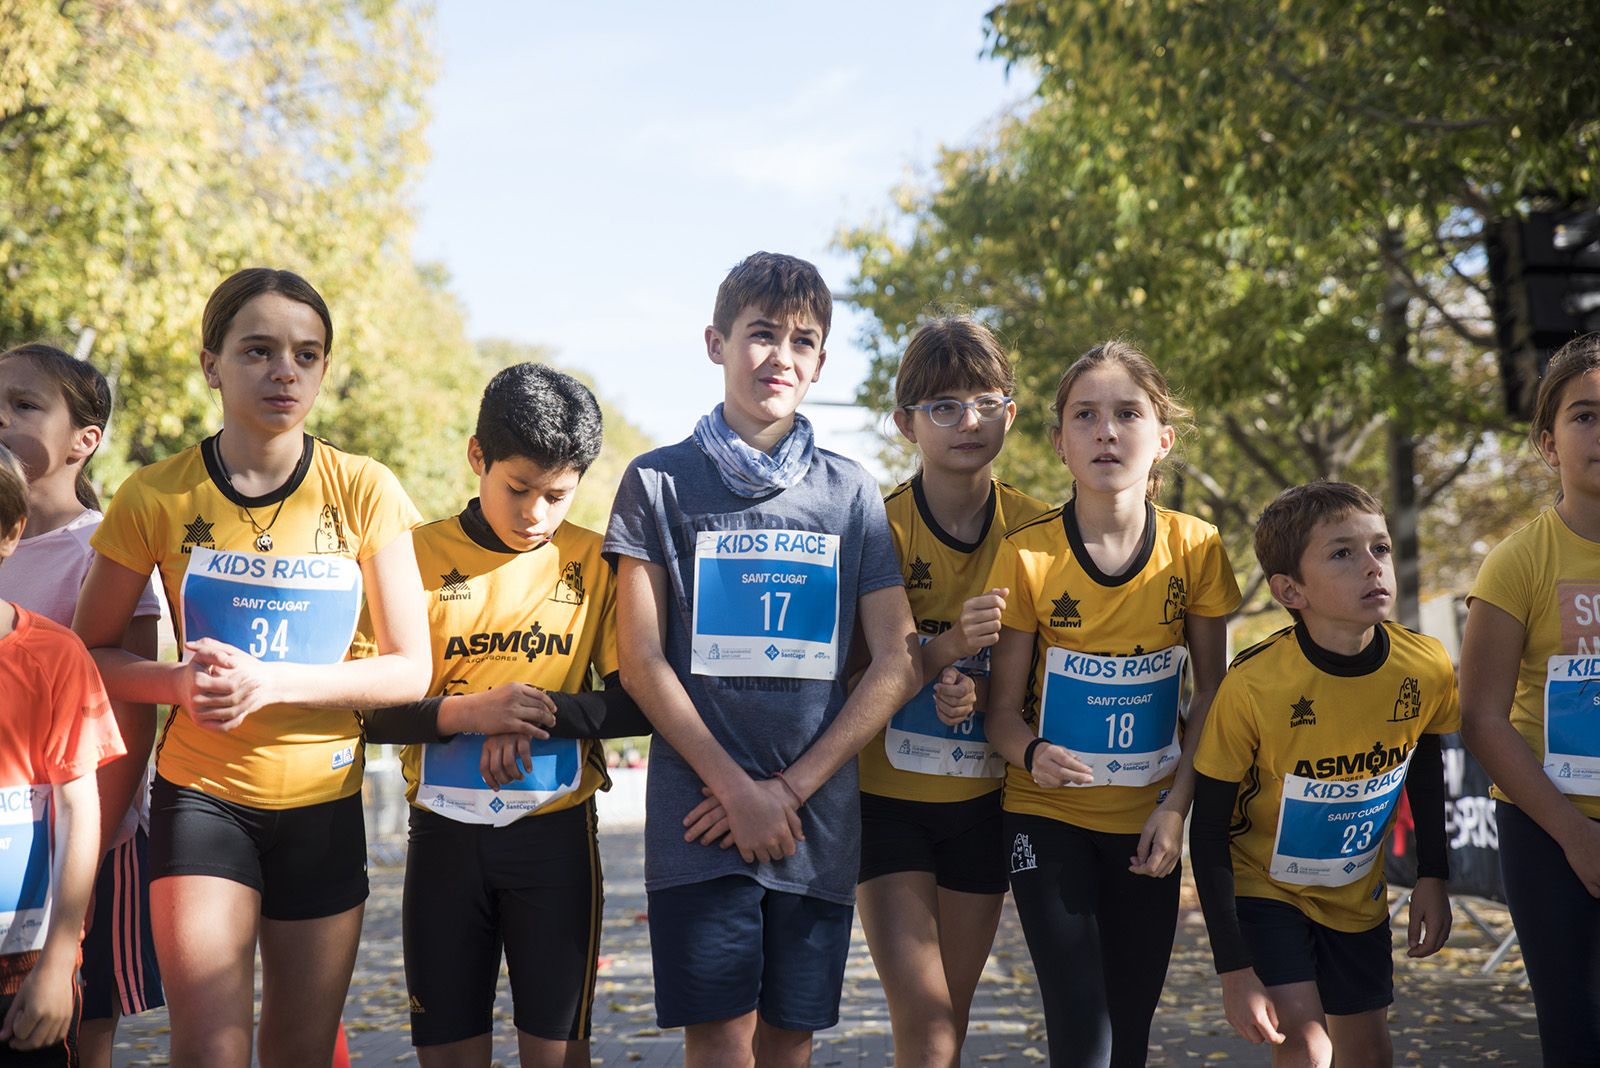 La Kids Race aterra a Sant Cugat per la Mitja Marató. FOTO: Bernat Millet.